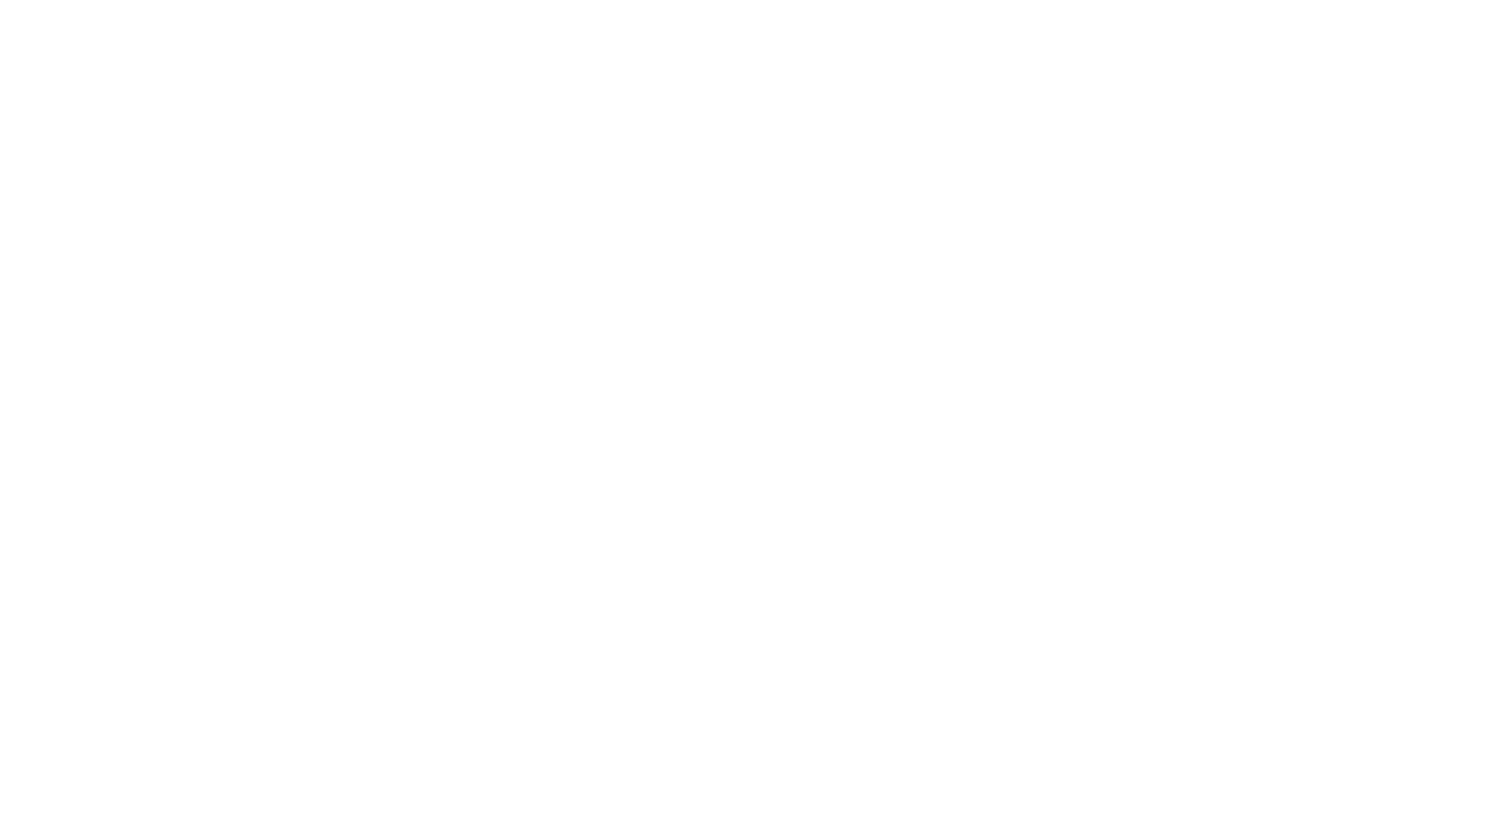 Zeleritaz International Group